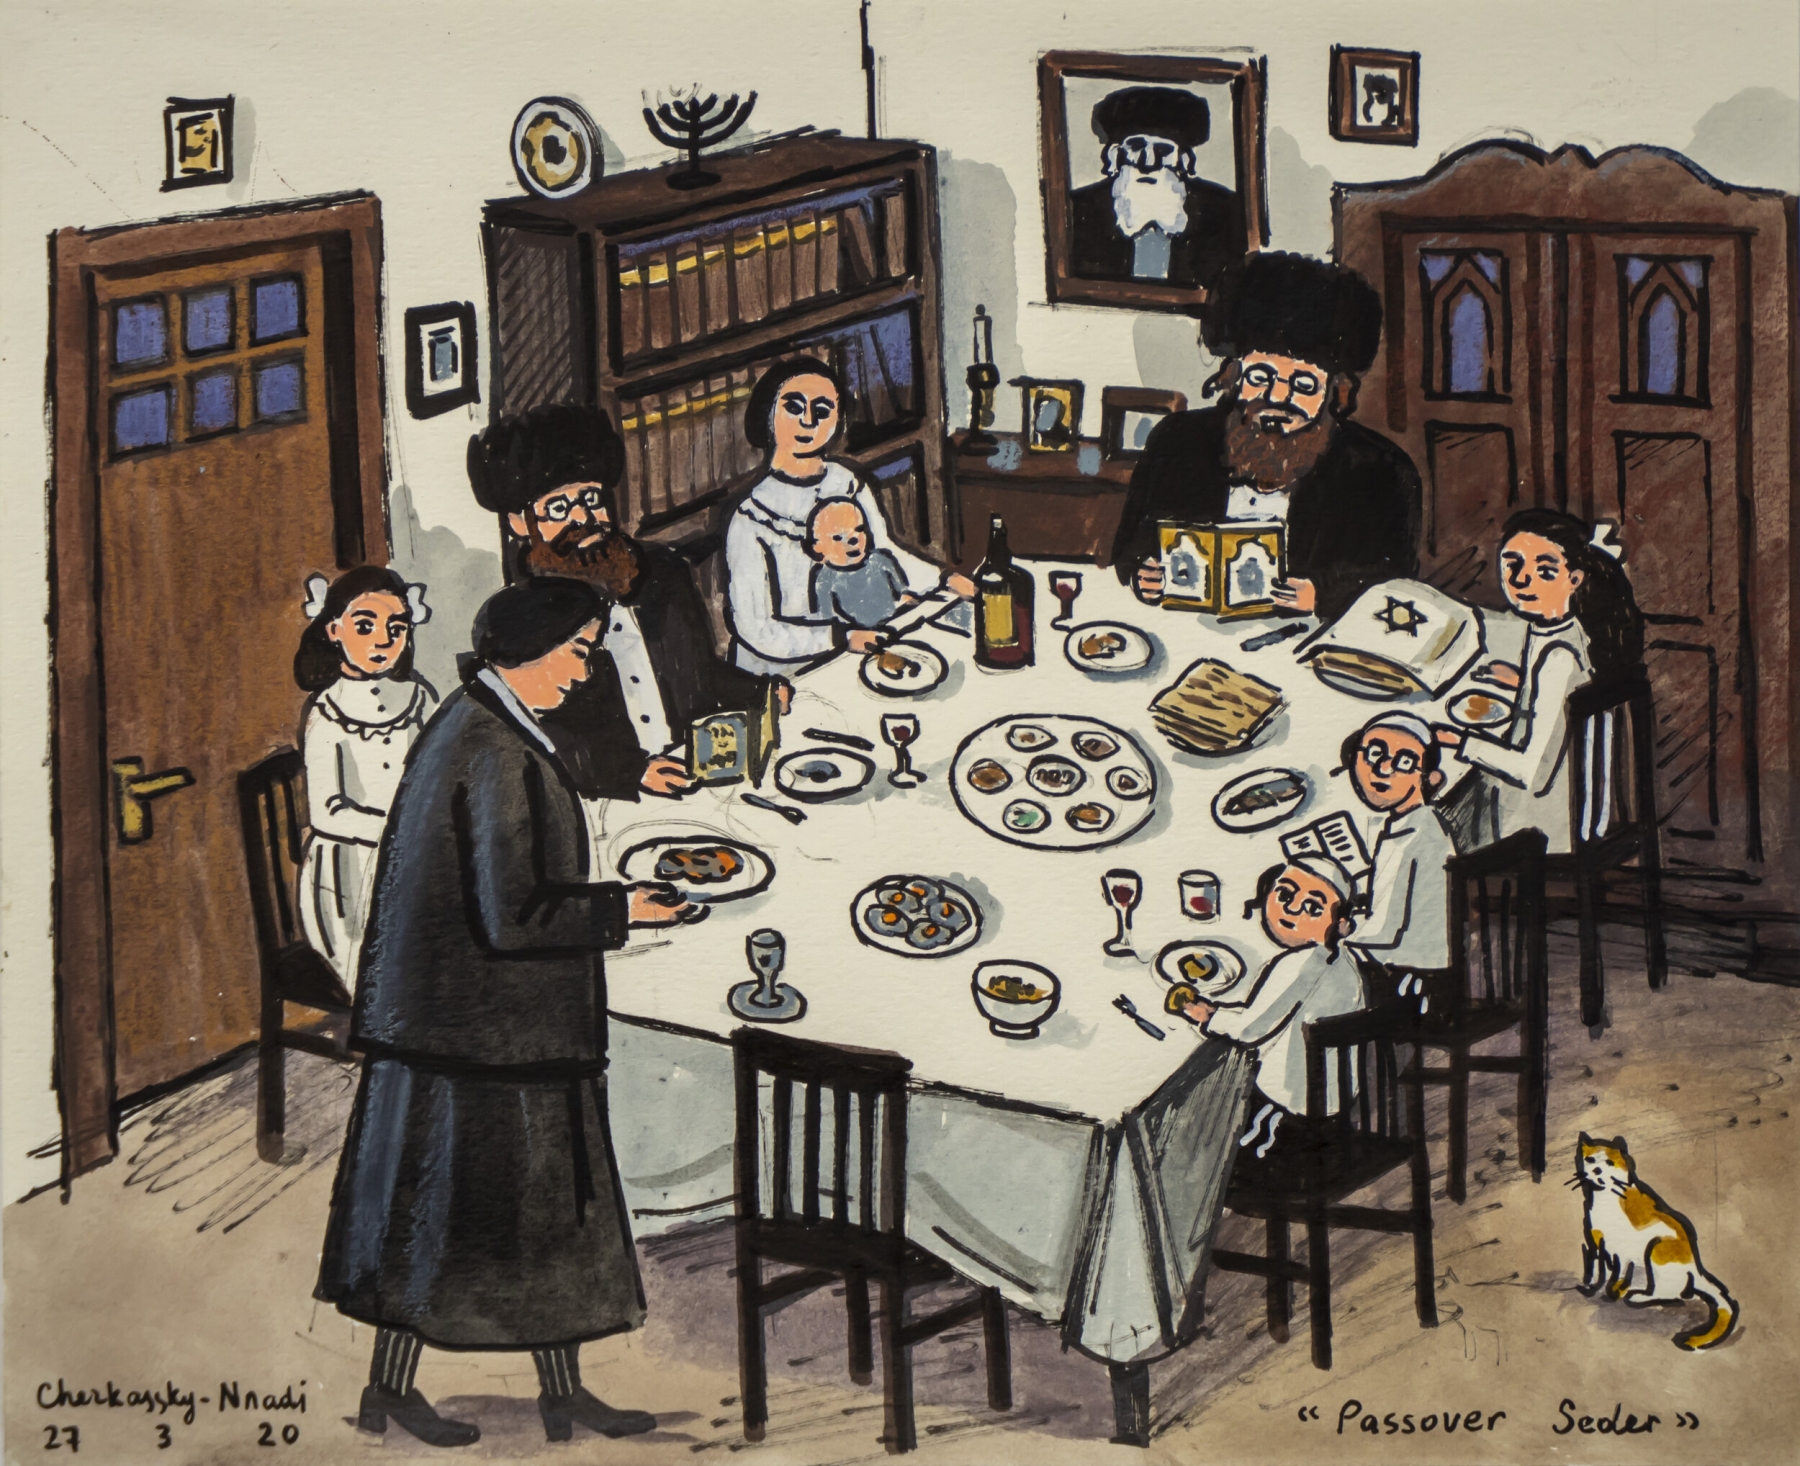 Zoya Cherkassky, Passover Sederink, 2020